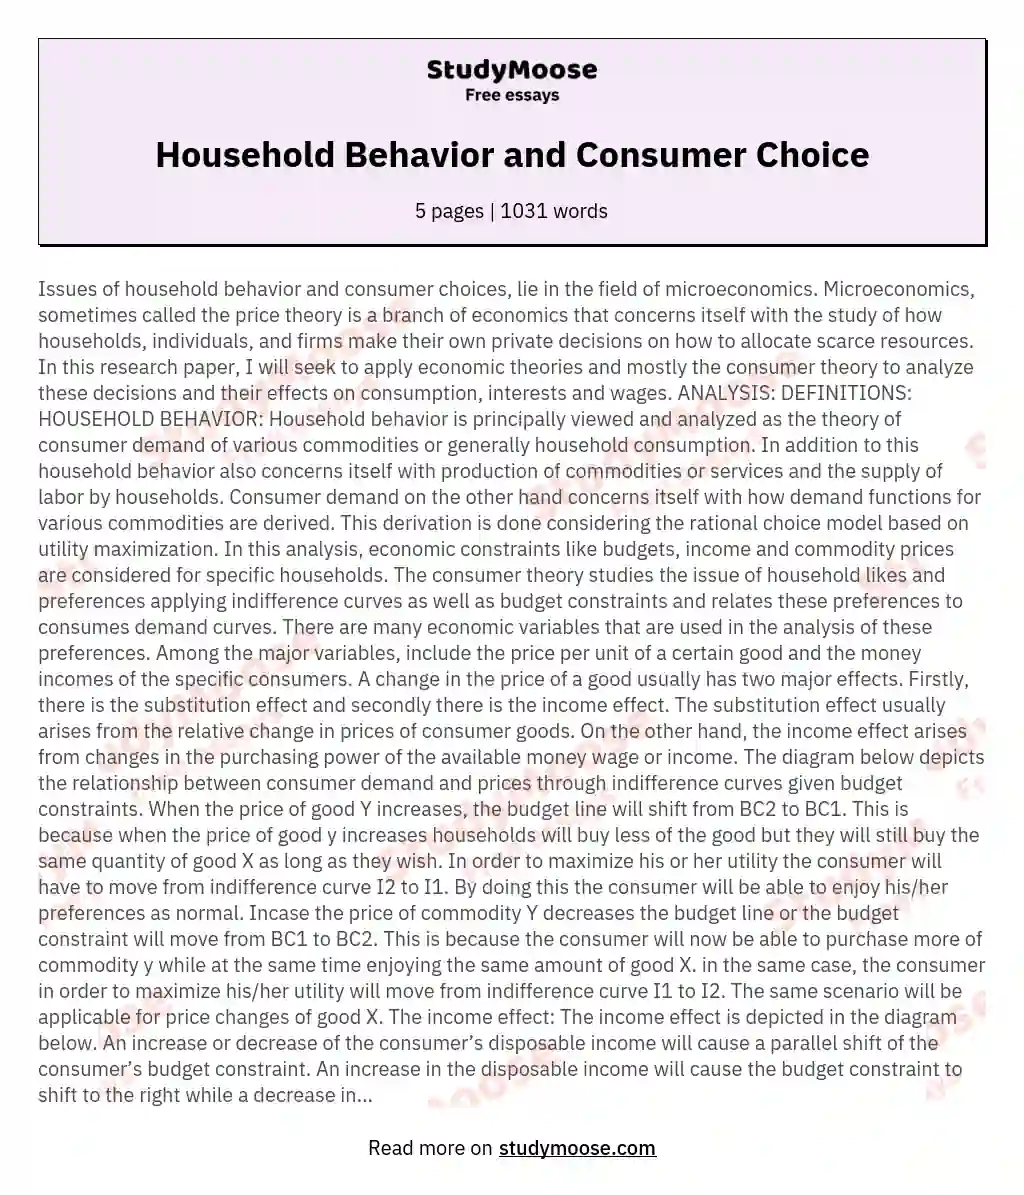 Household Behavior and Consumer Choice essay